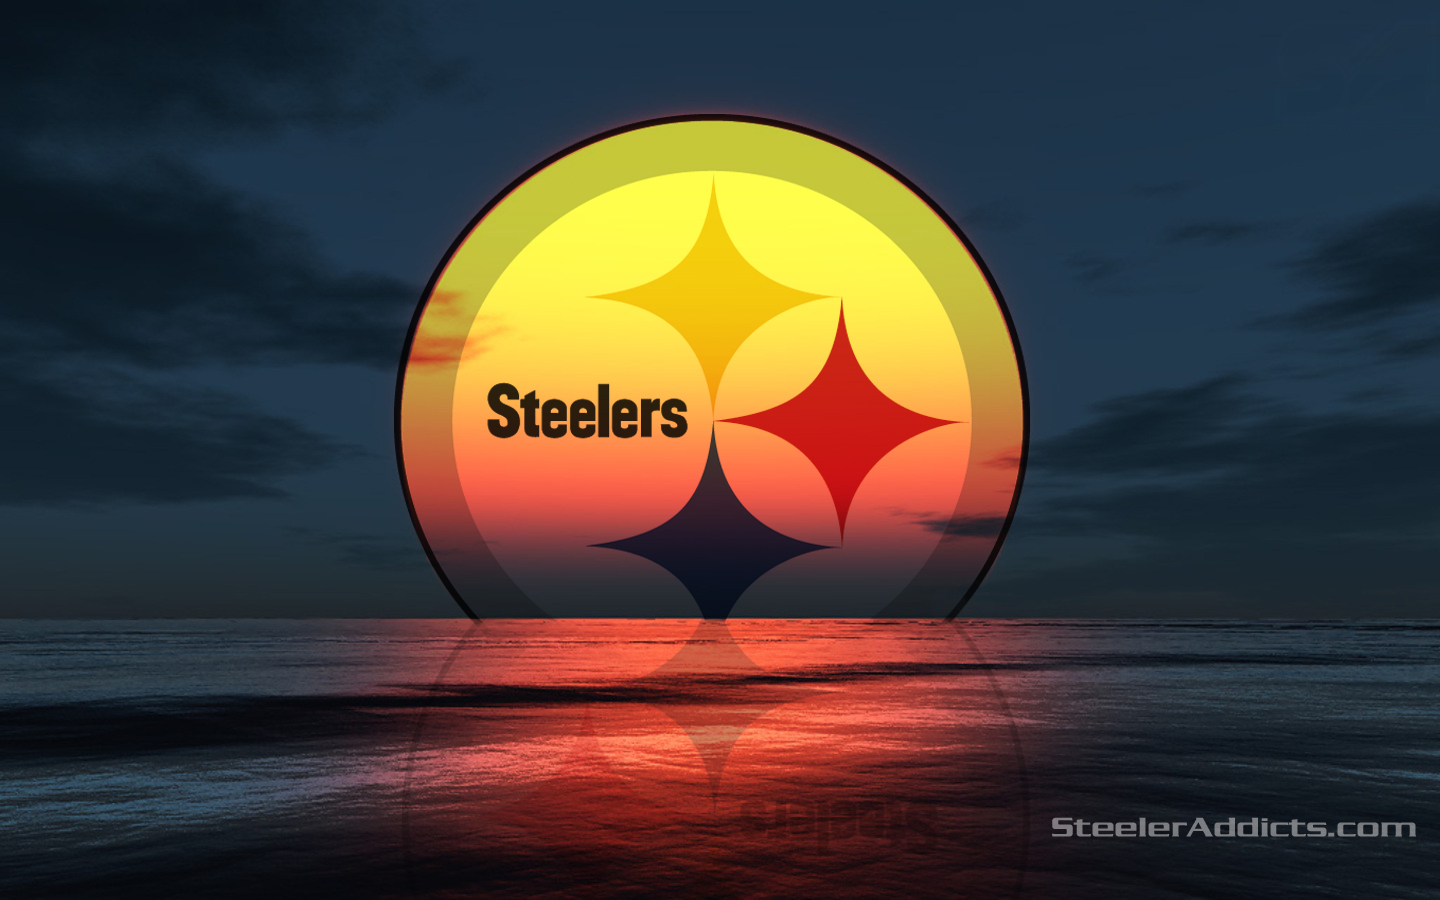 Steelers Sunset Photo